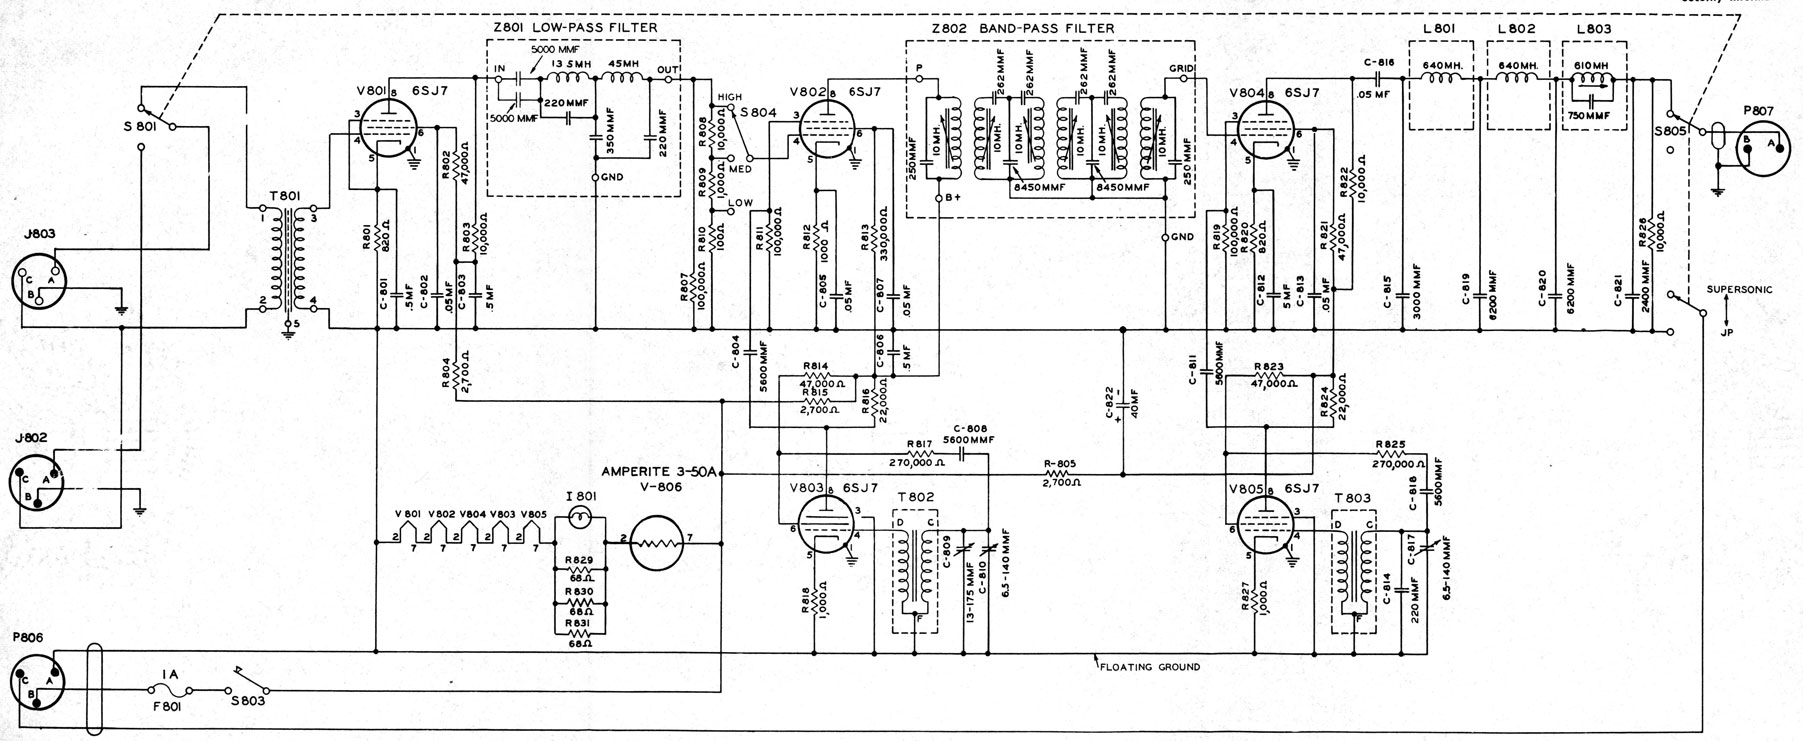 Schematic diagram of the supersonic-converter unit.